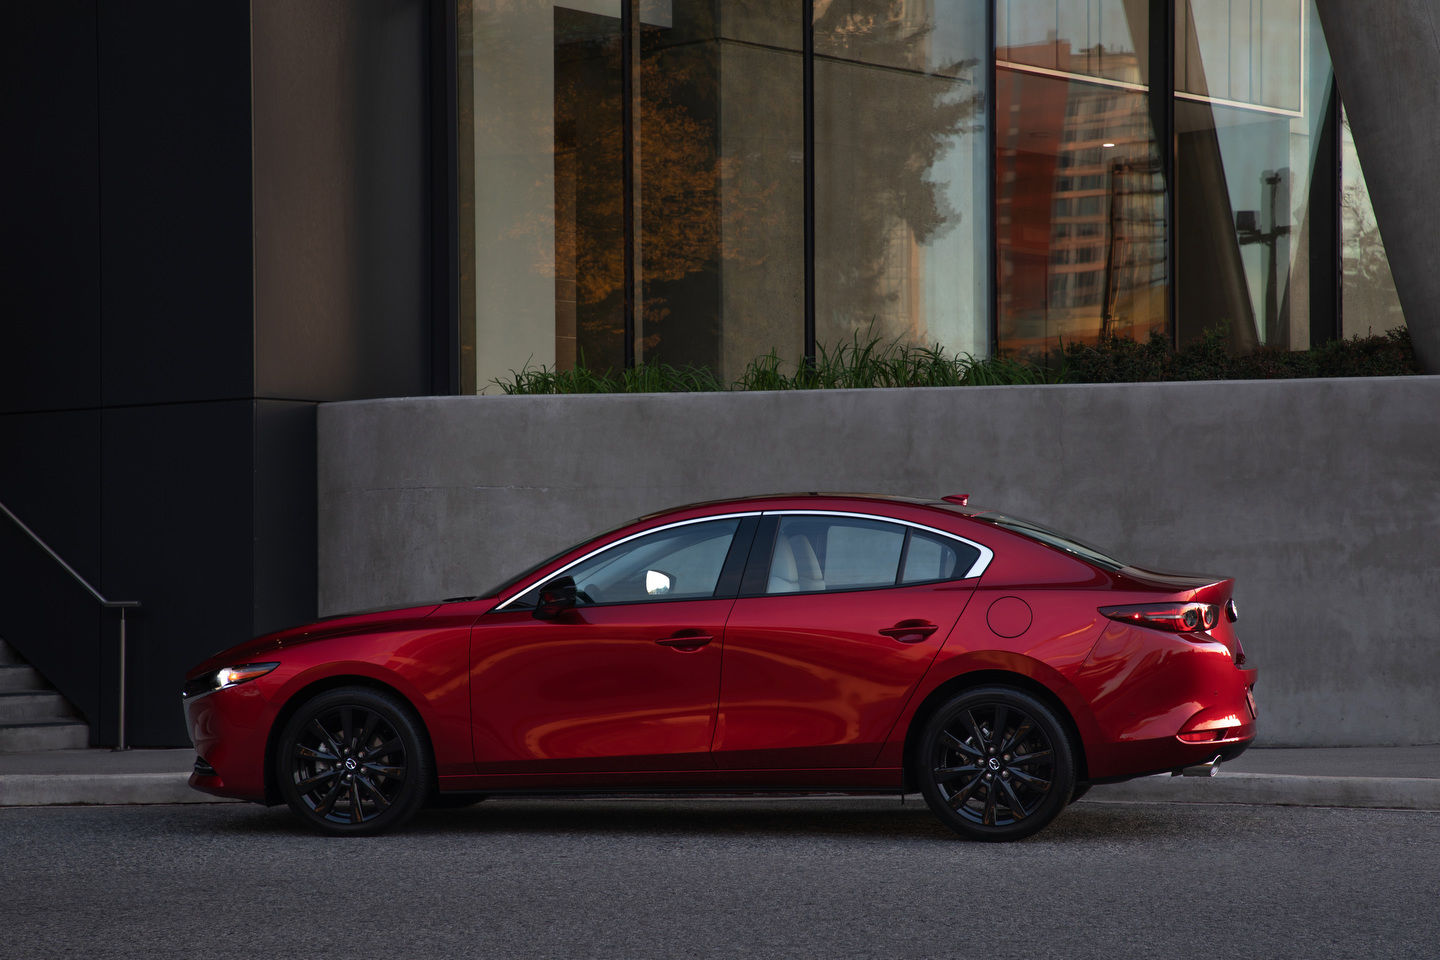 2022 Mazda3: A few reasons to consider the Mazda sedan